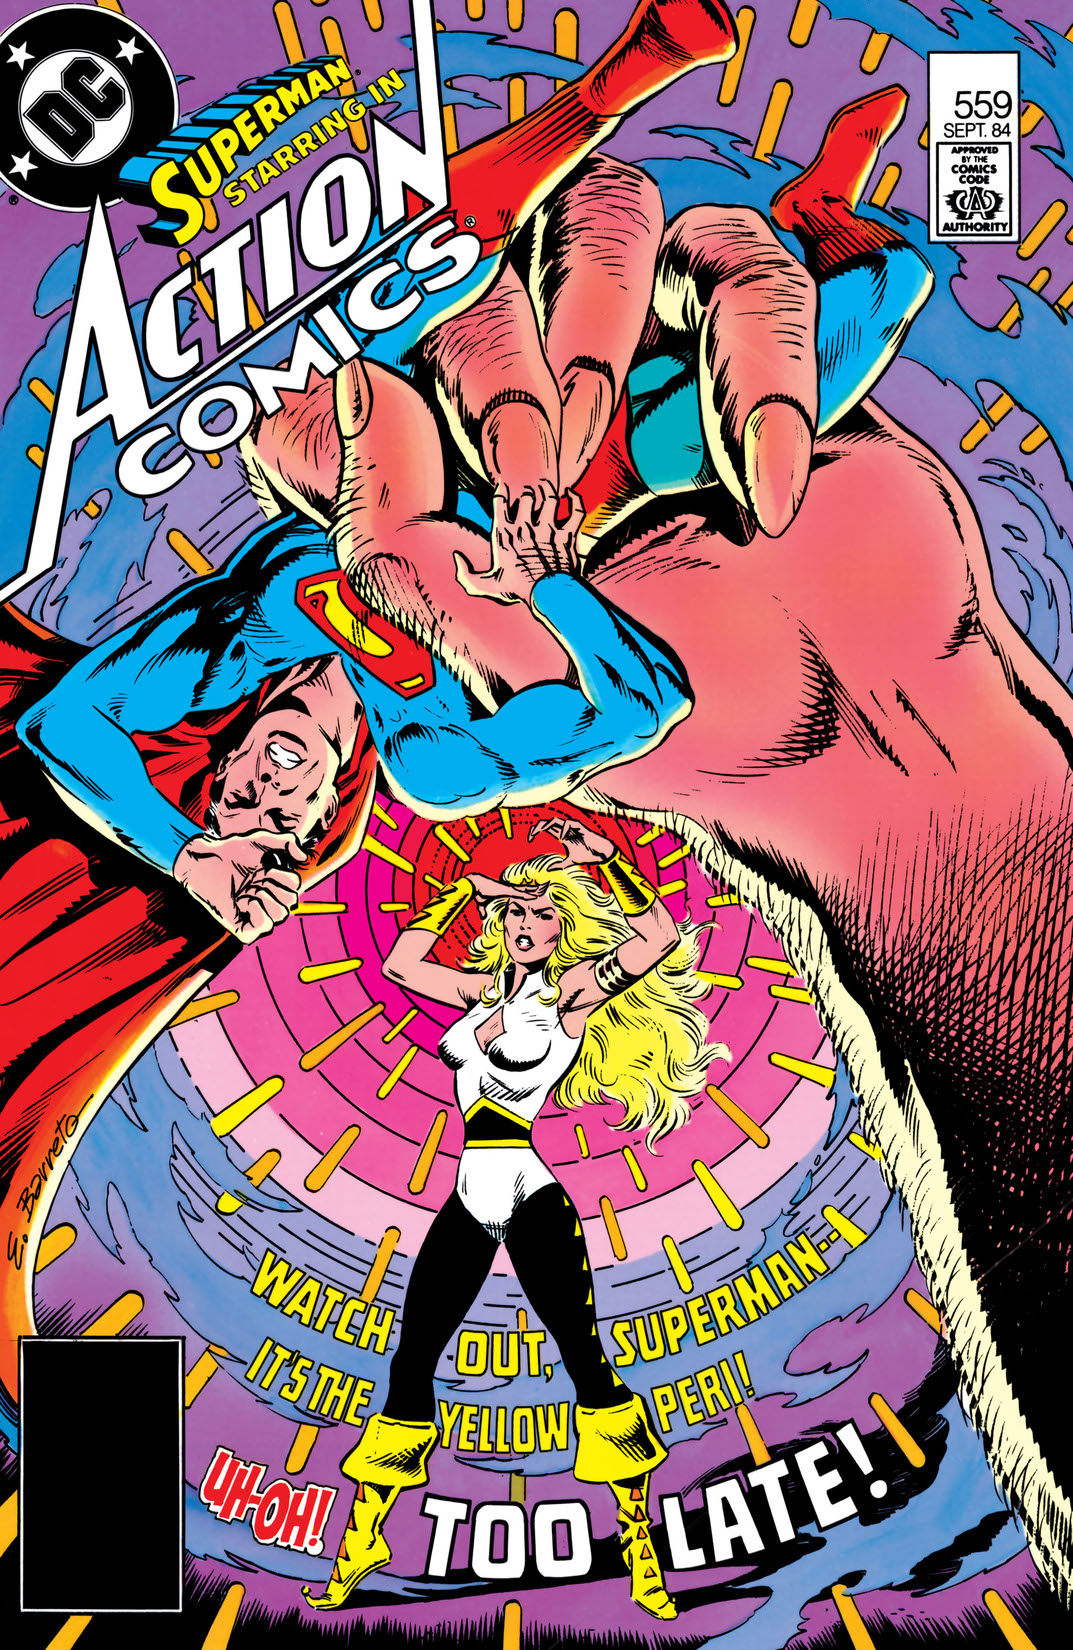 Action Comics (1938-) #559 preview images